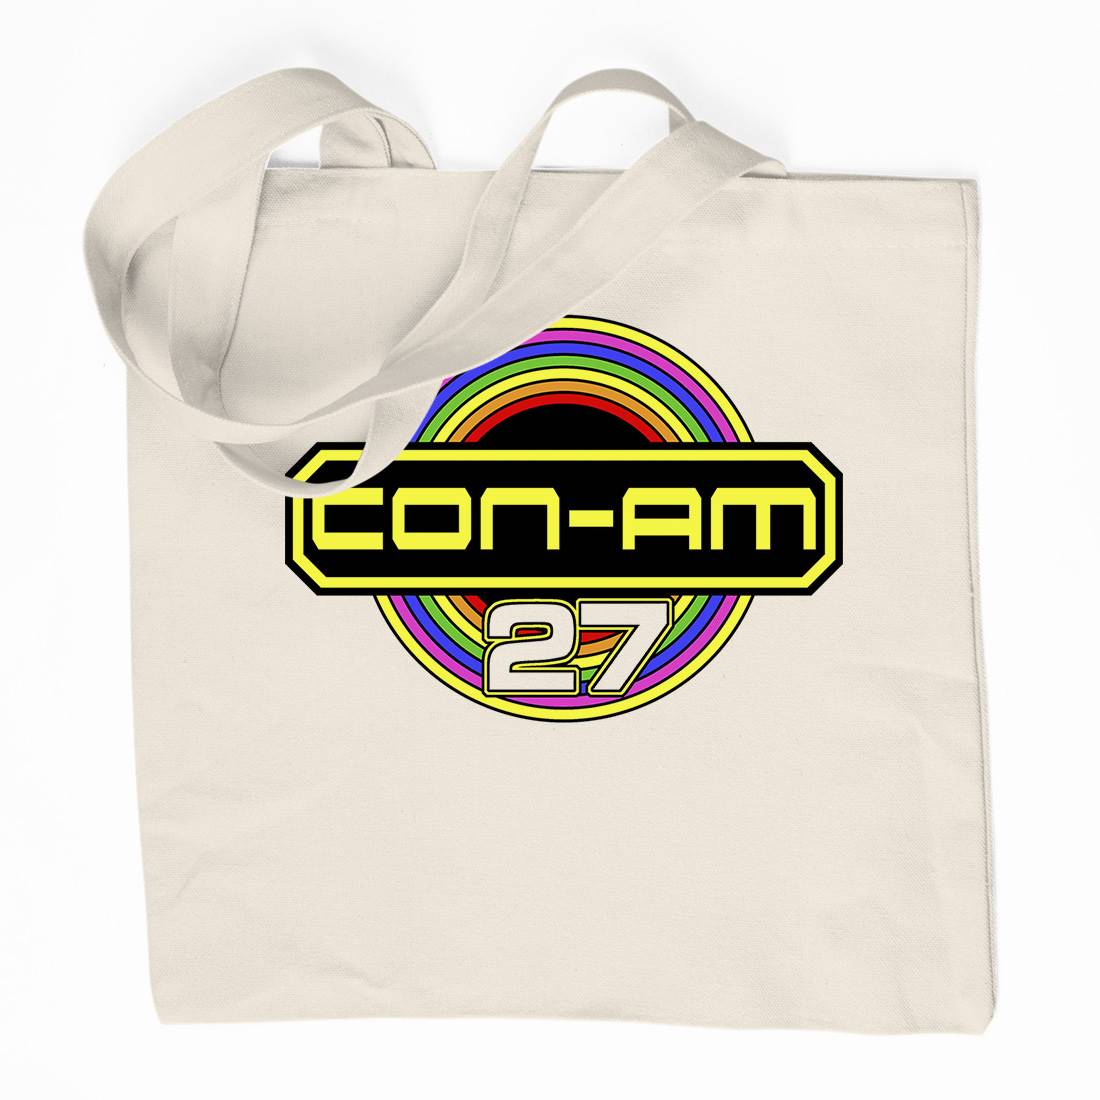 Con-Am 27 Organic Premium Cotton Tote Bag Space D414